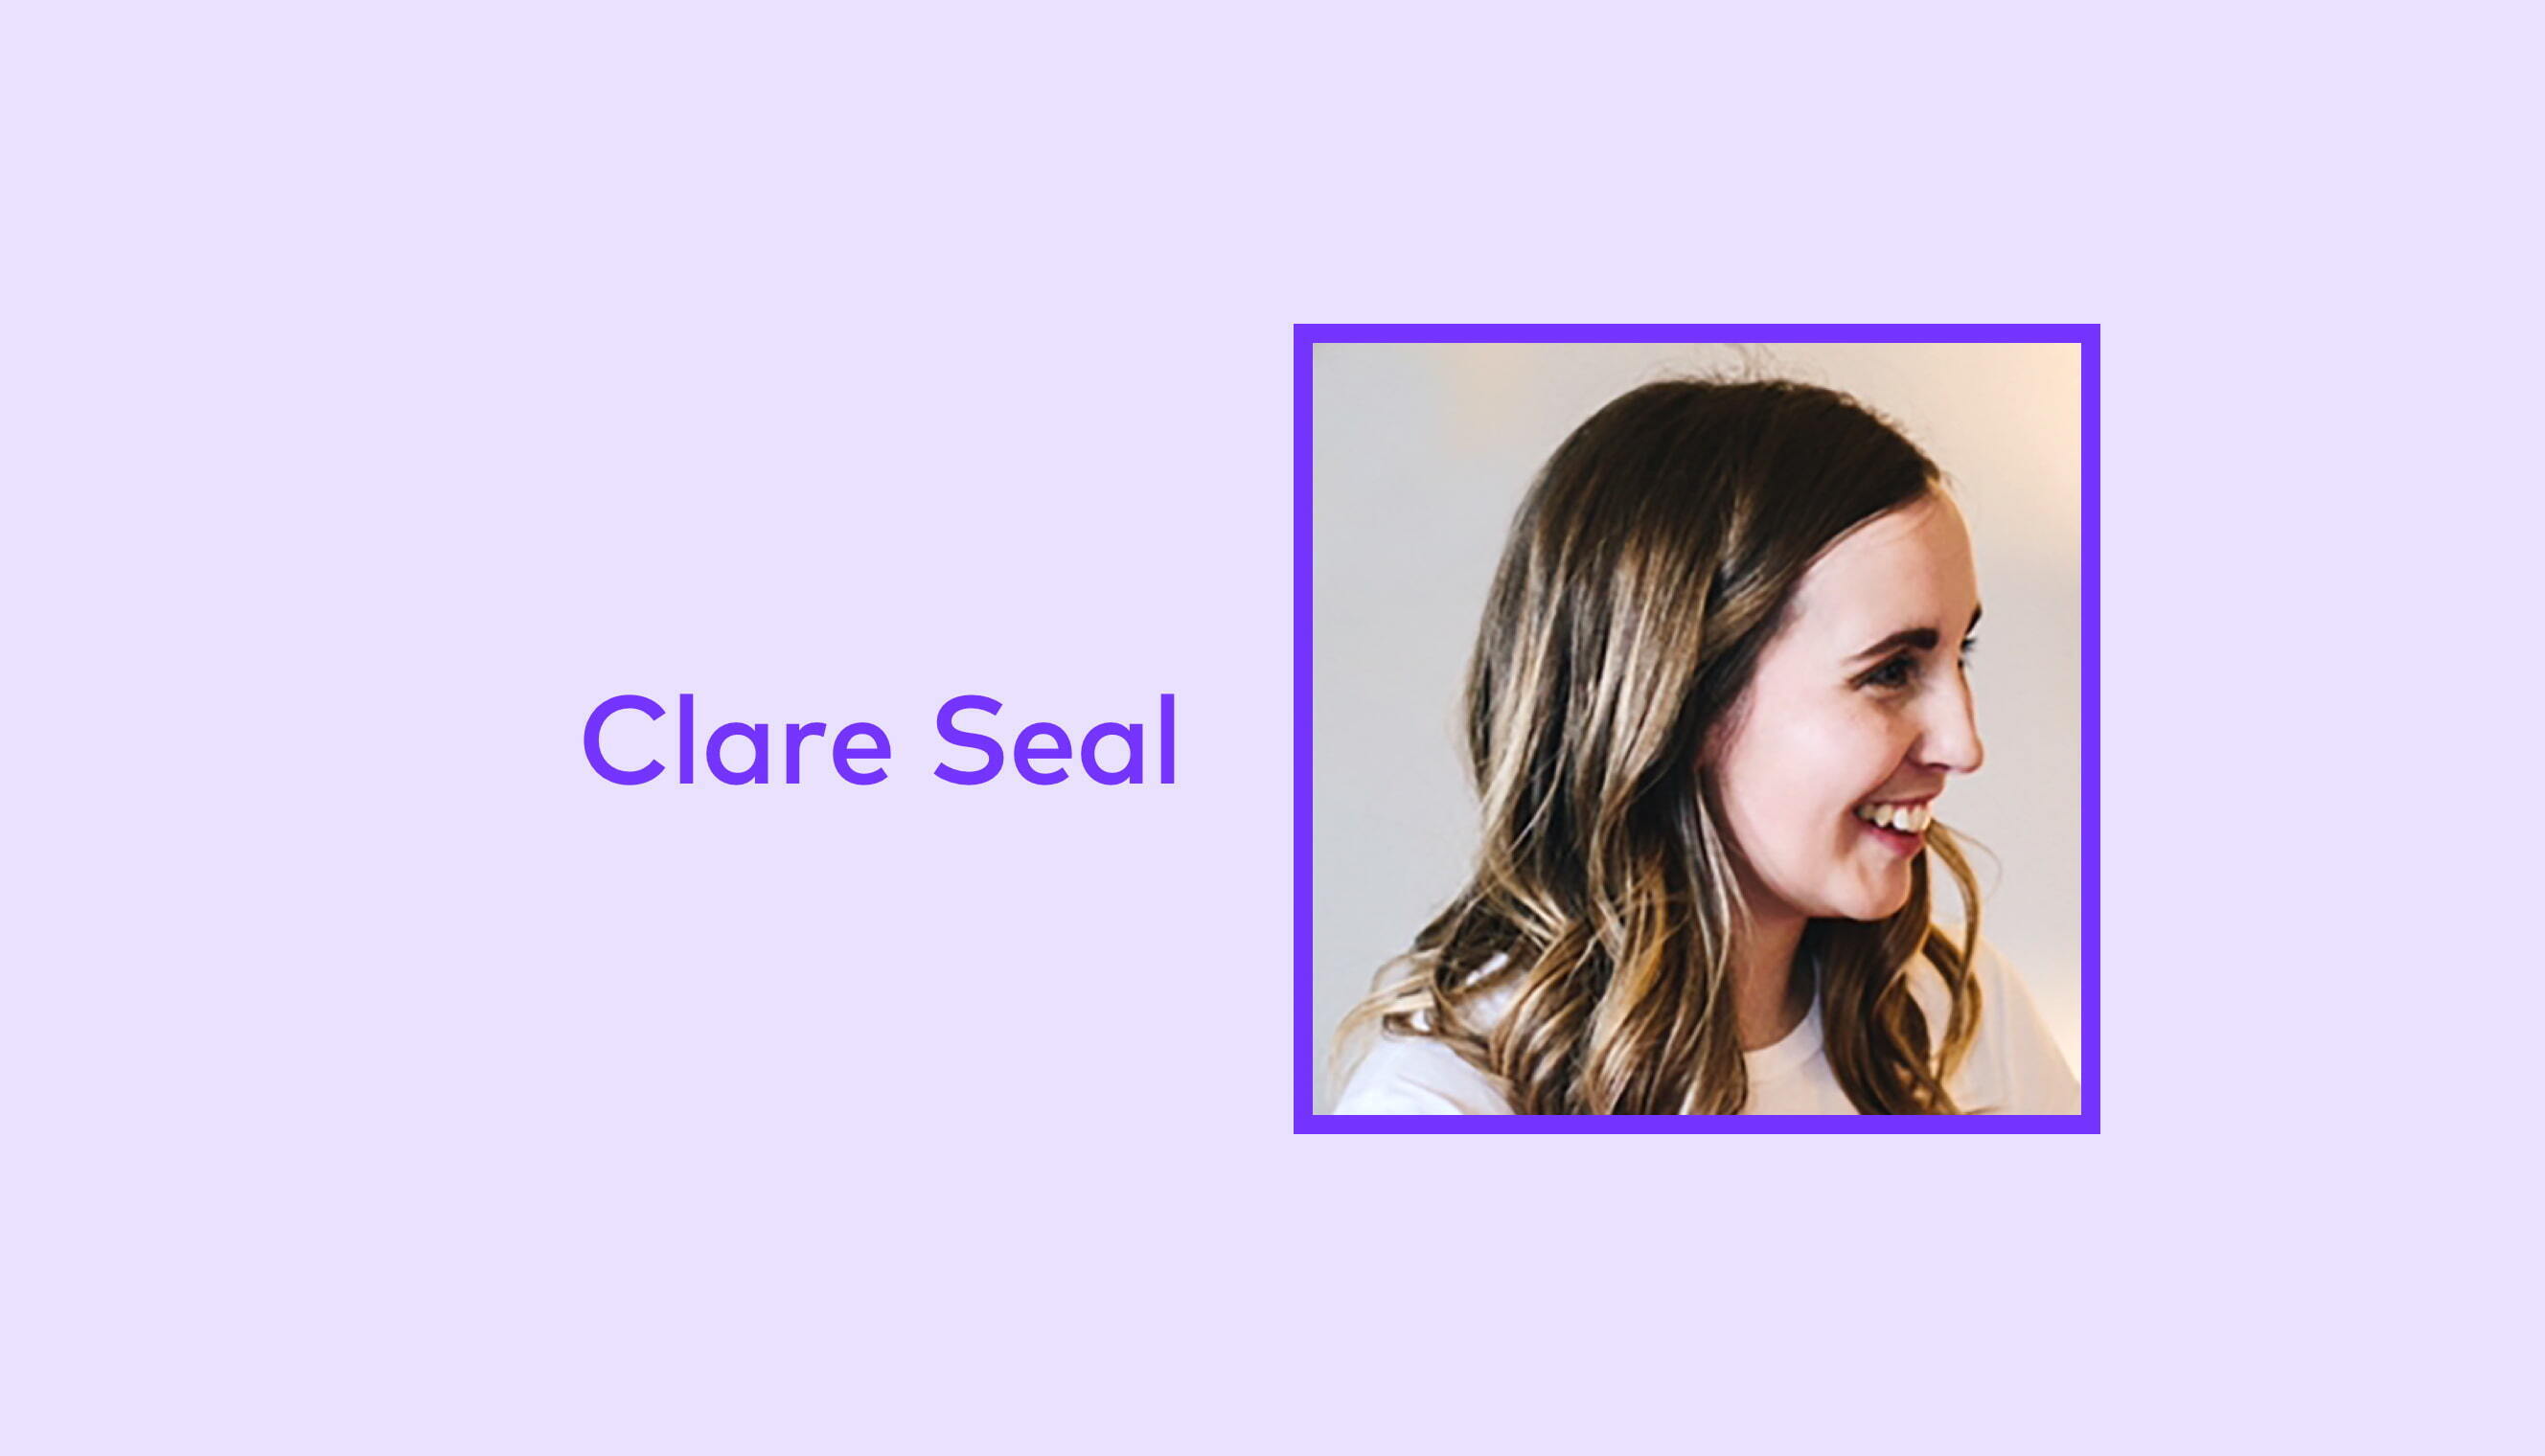 Clare Seal